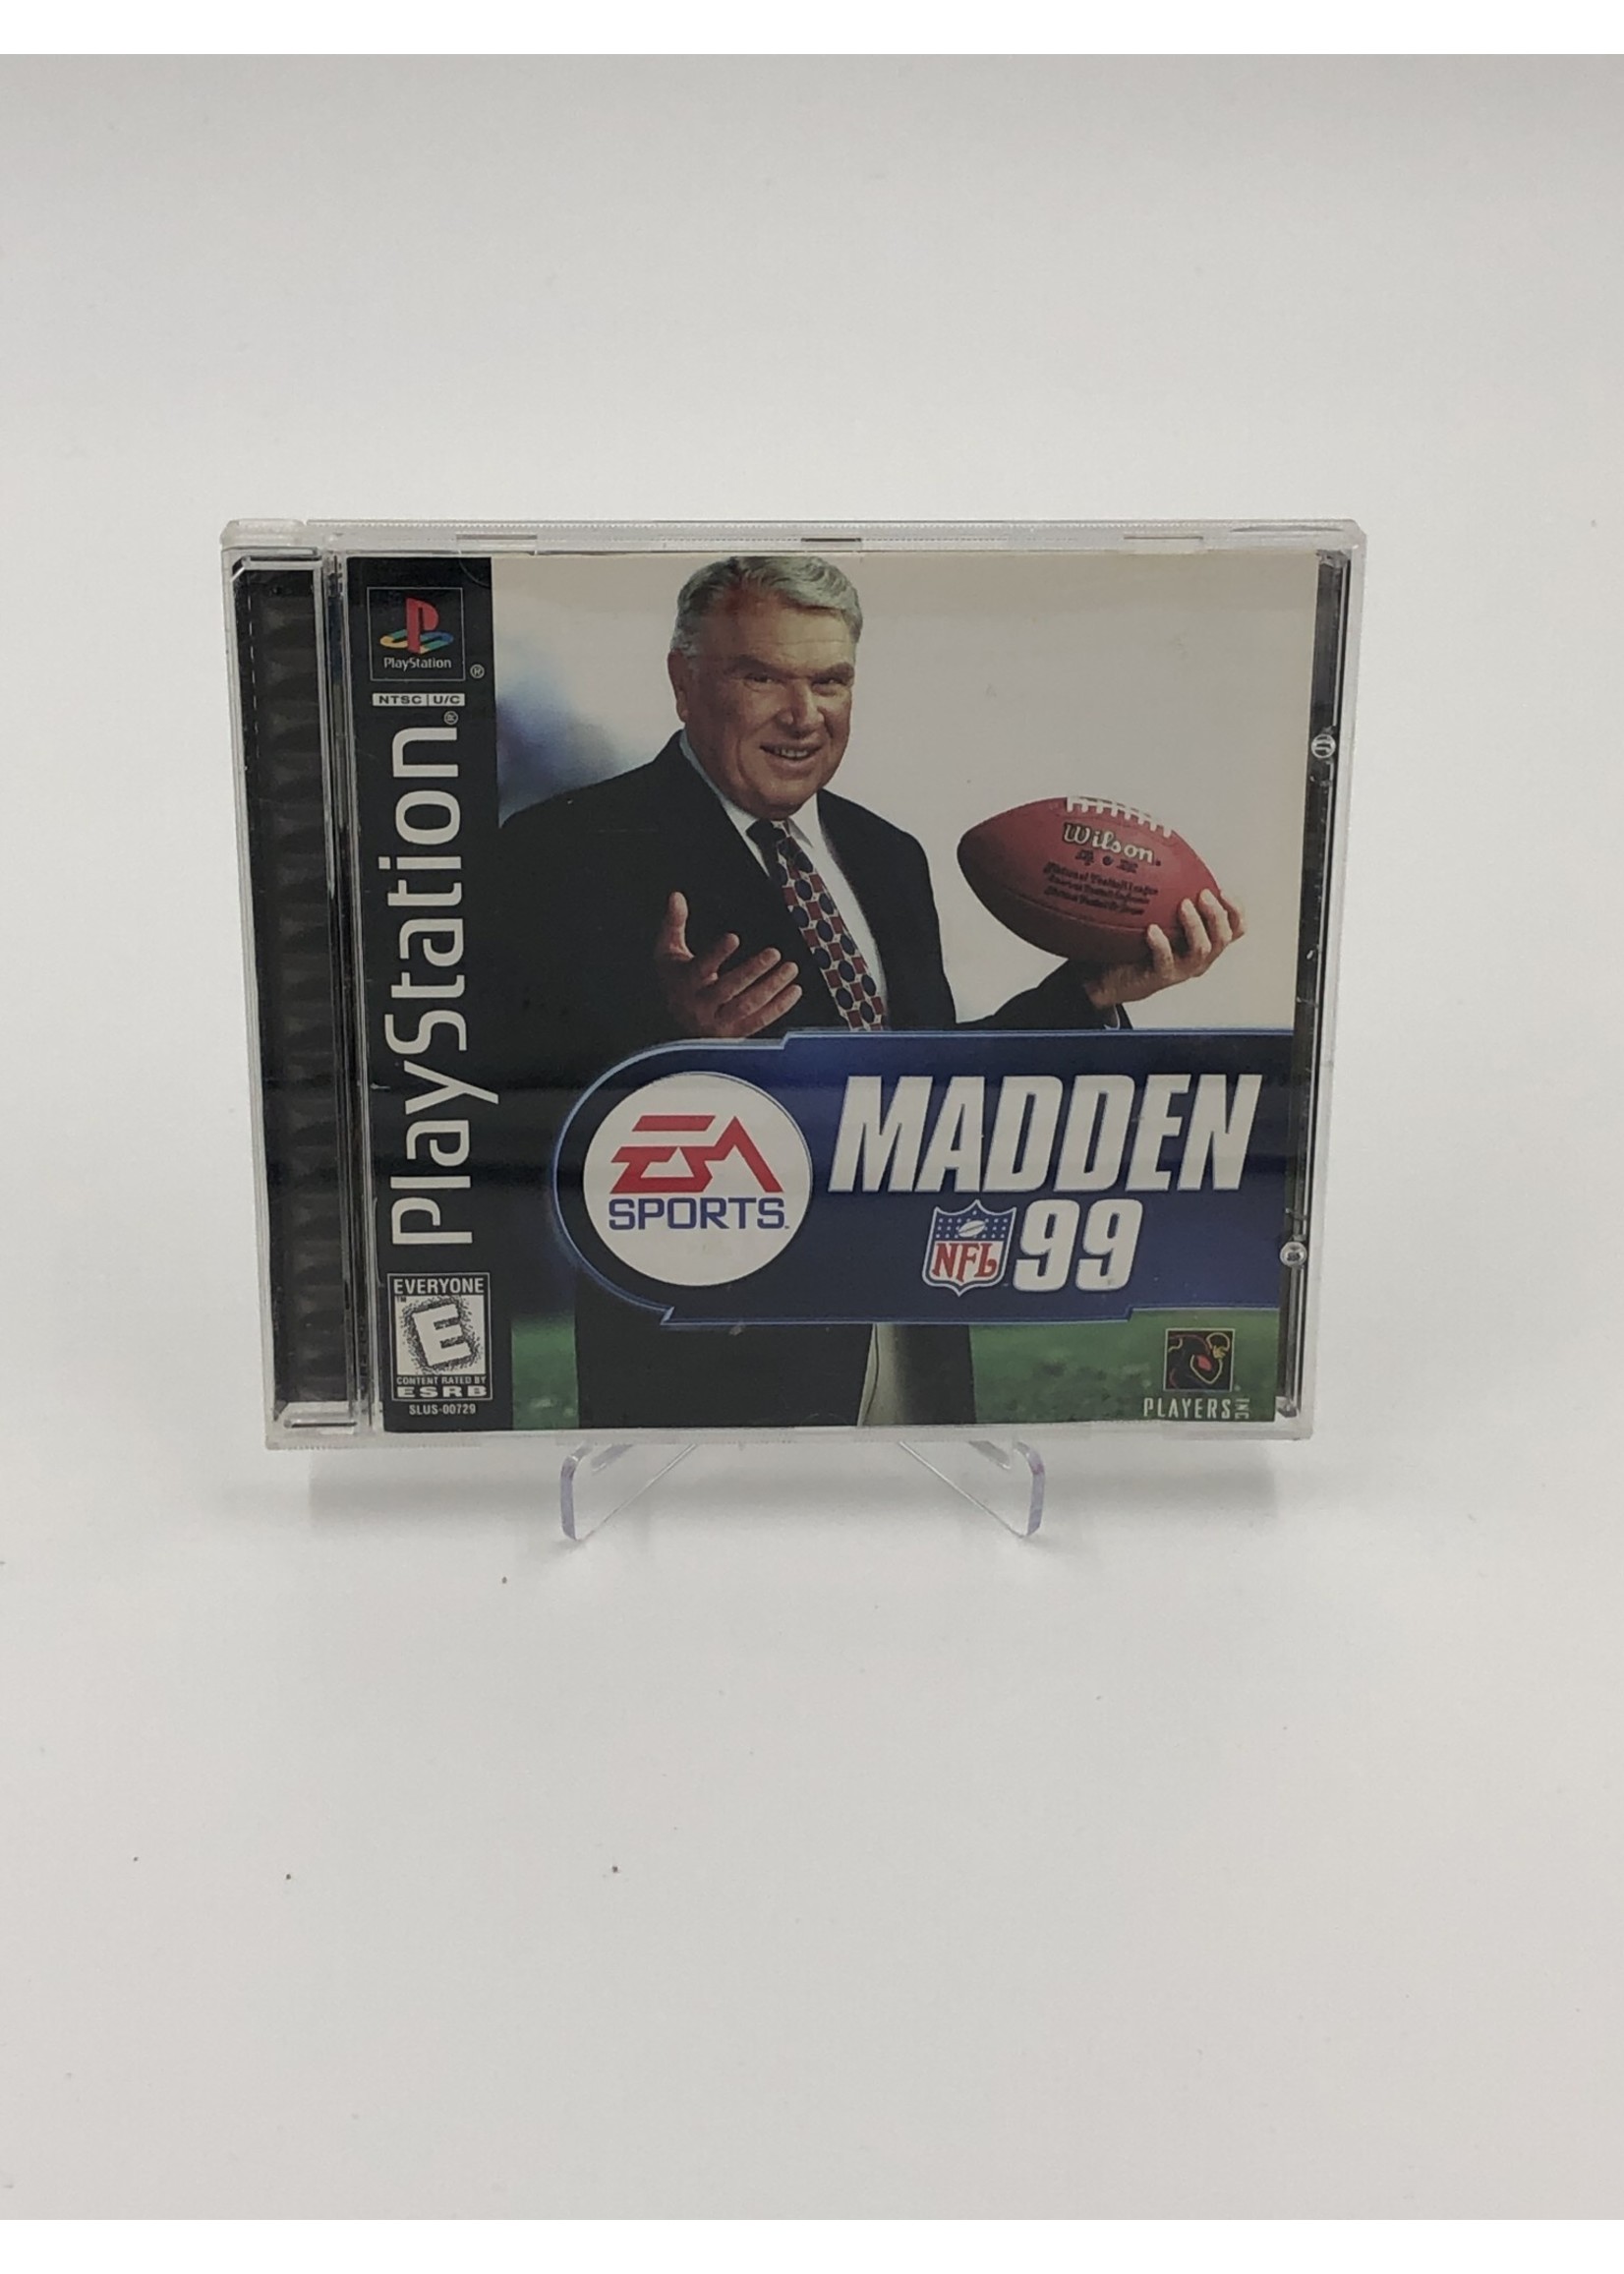 Sony   Madden NFL 99 PS